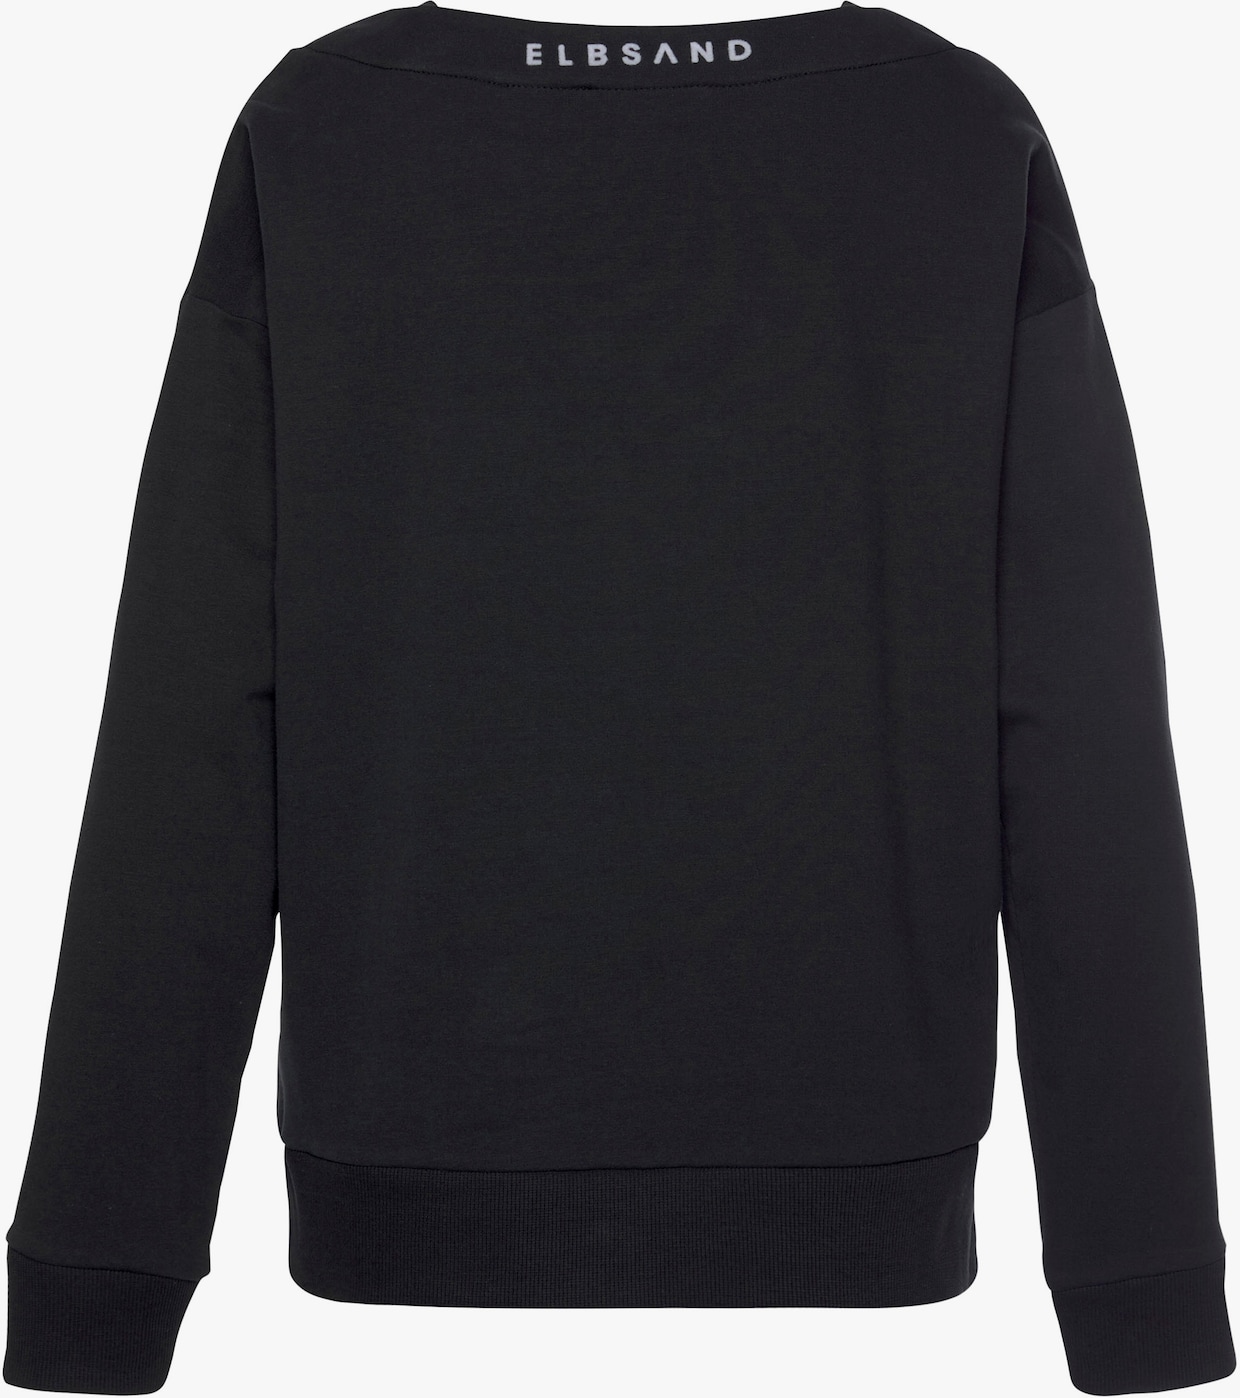 Elbsand Sweatshirt - schwarz